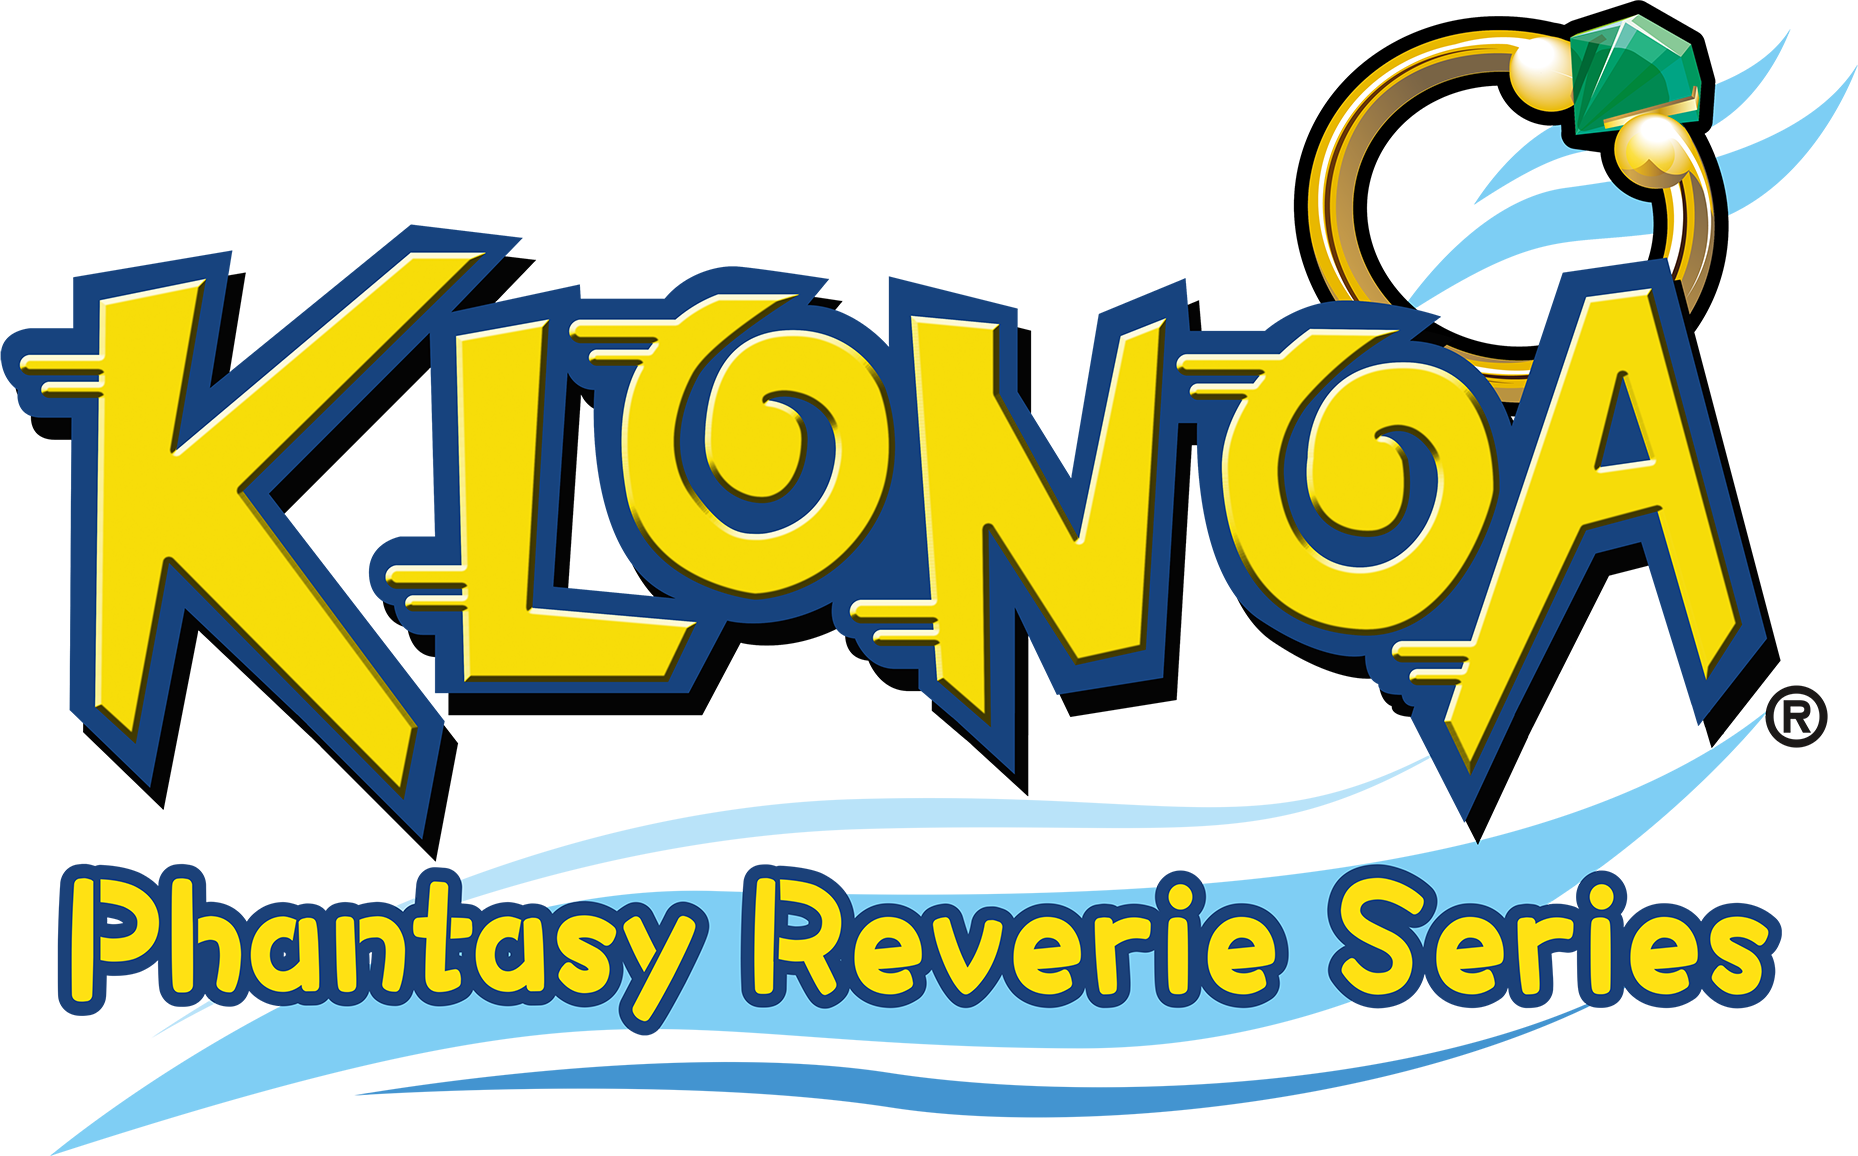 Klonoa Phantasy Reverie Series